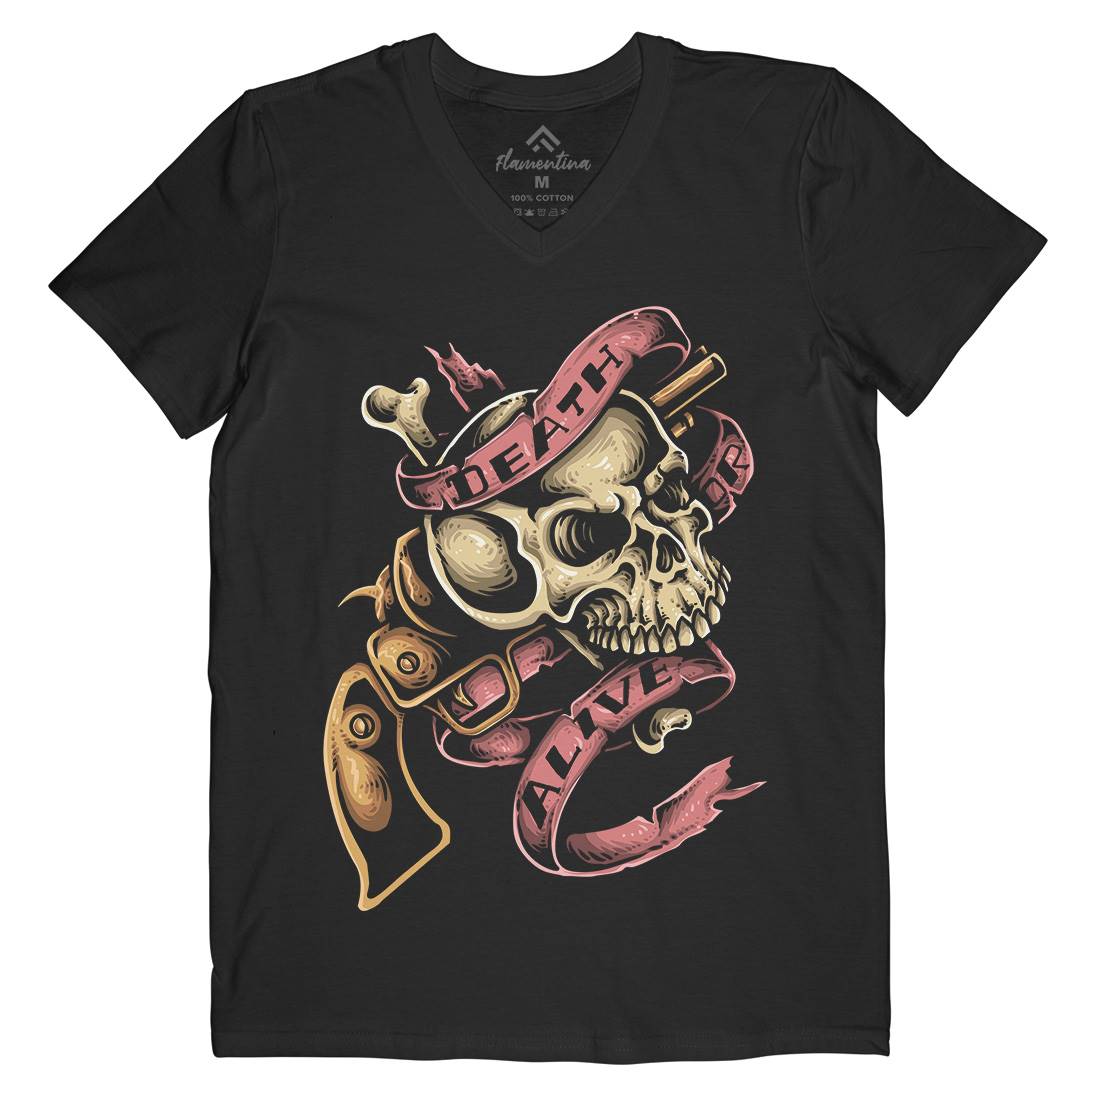 Death Or Alive Mens Organic V-Neck T-Shirt Navy A416